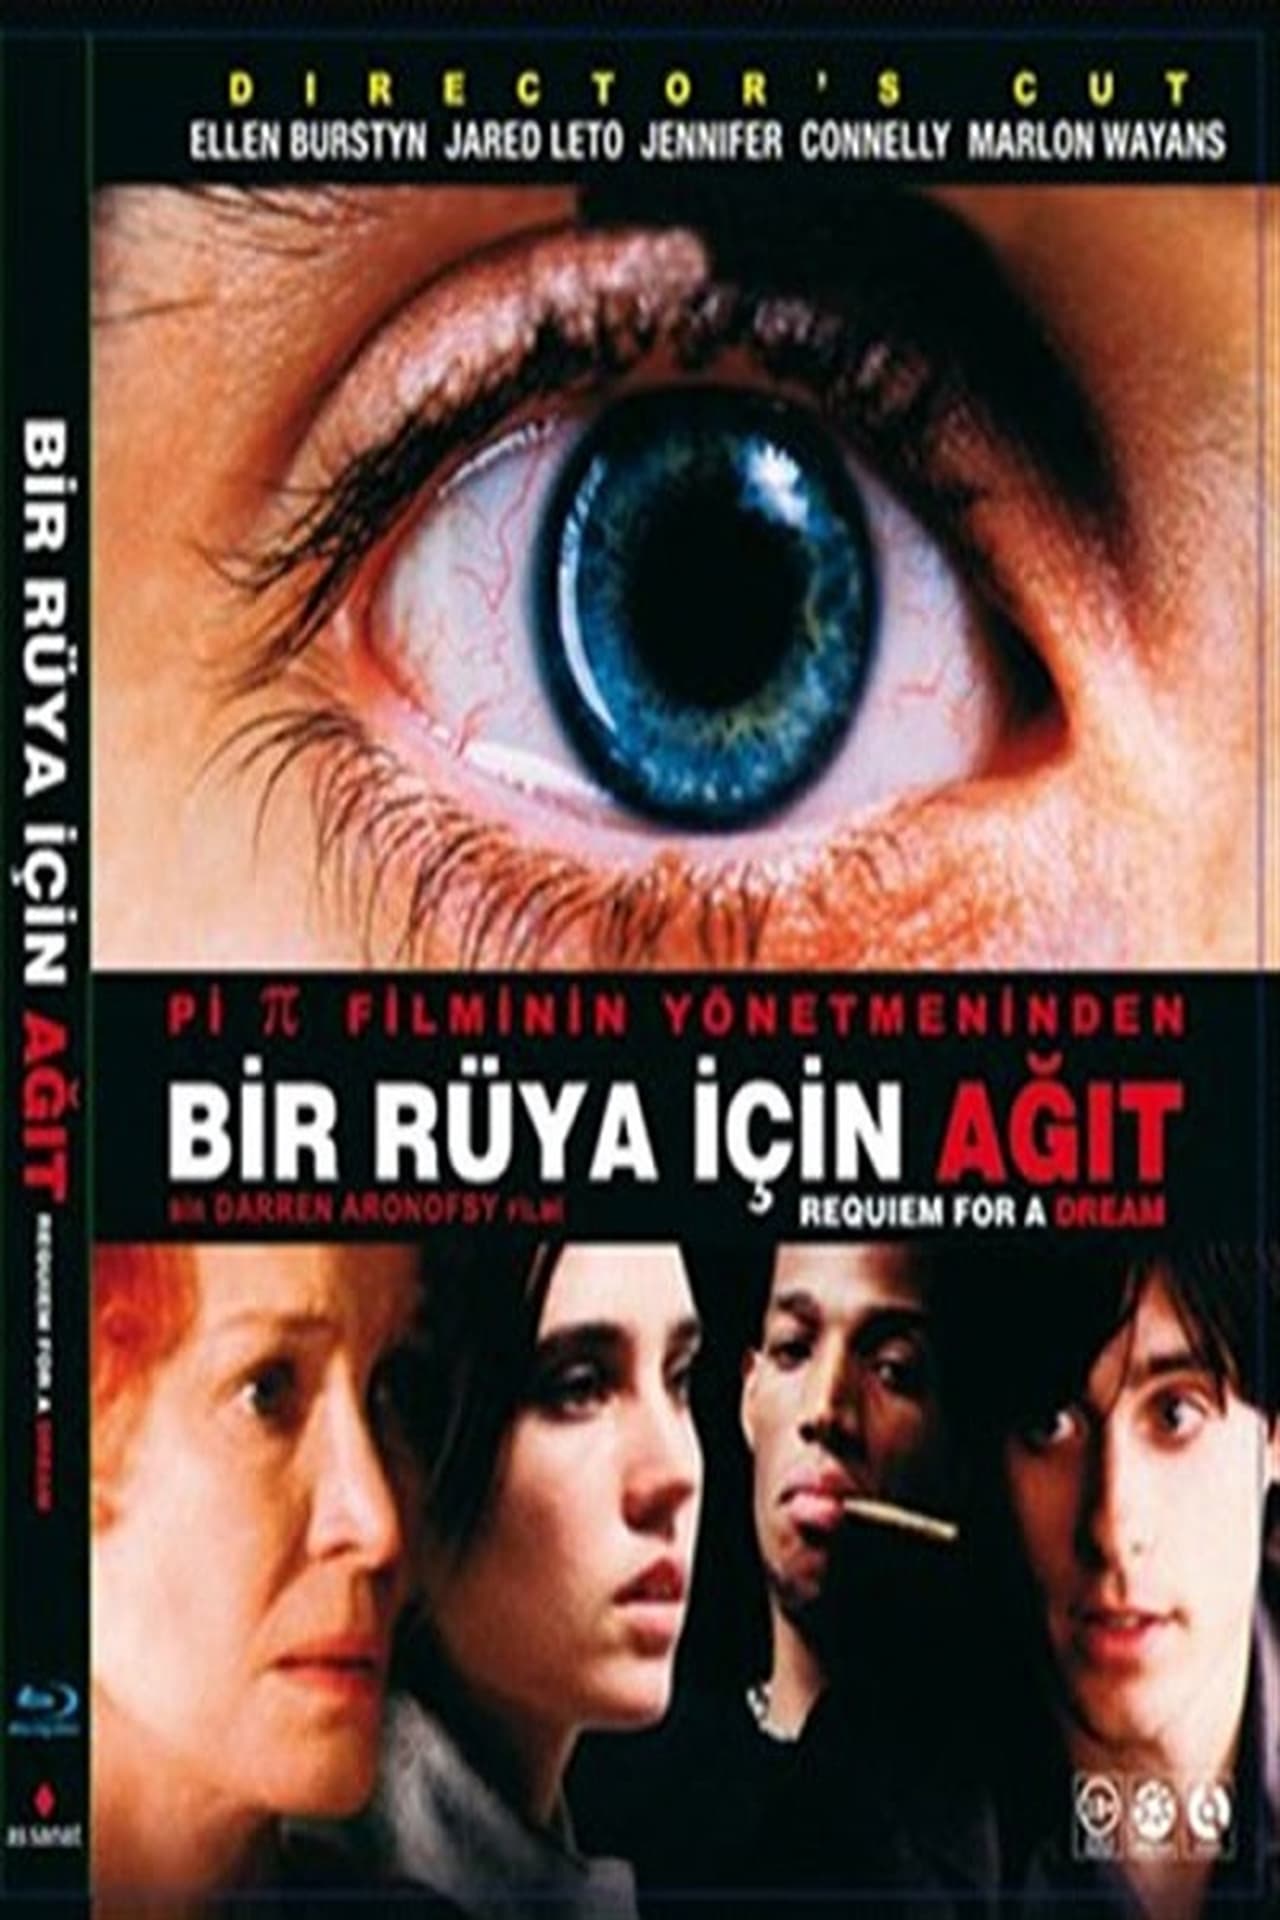 Requiem for a Dream (2000) 3569Kbps 23.976Fps 48Khz BluRay DTS-HD MA 5.1Ch Turkish Audio TAC